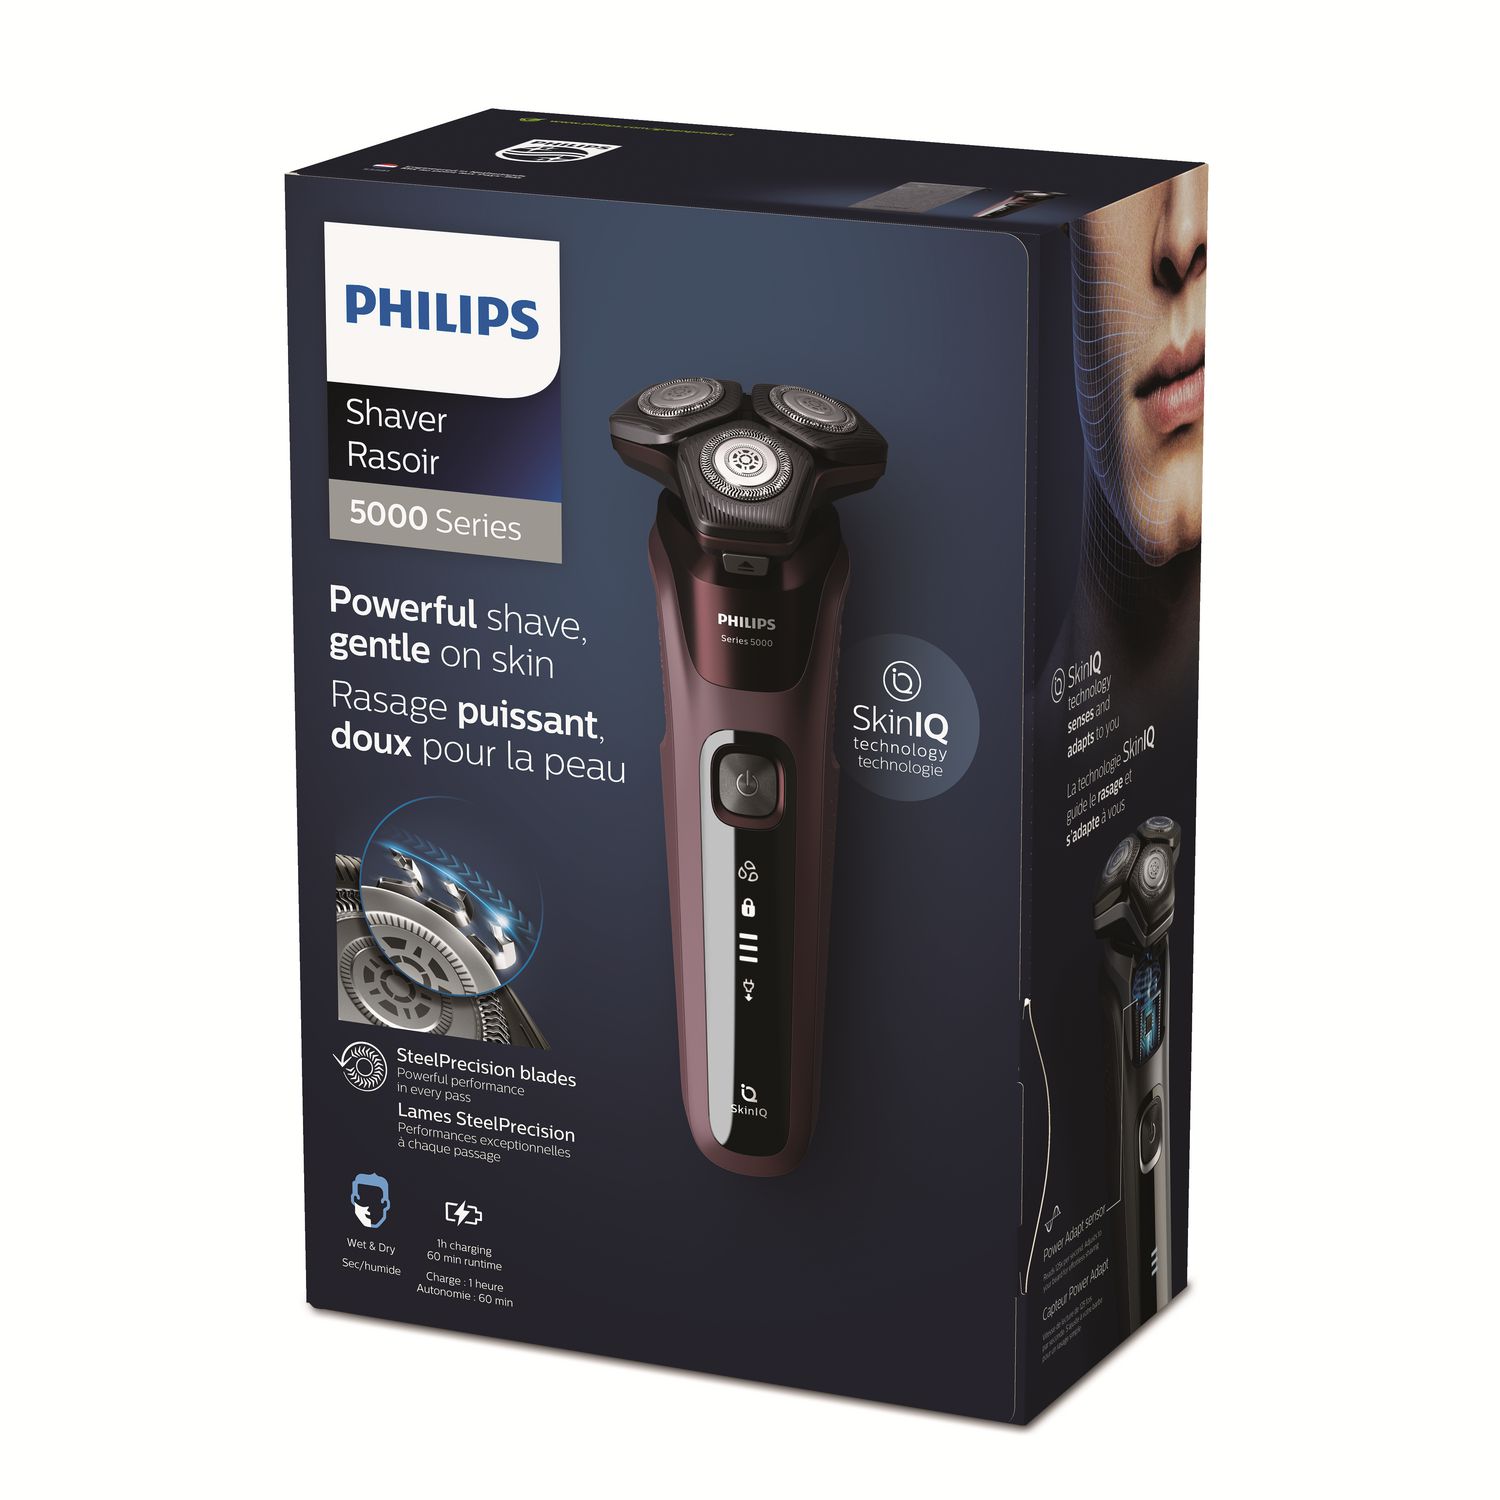 Филипс Сериес 5000. Philips s5588/30 SKINIQ. Philips series 5000 цены